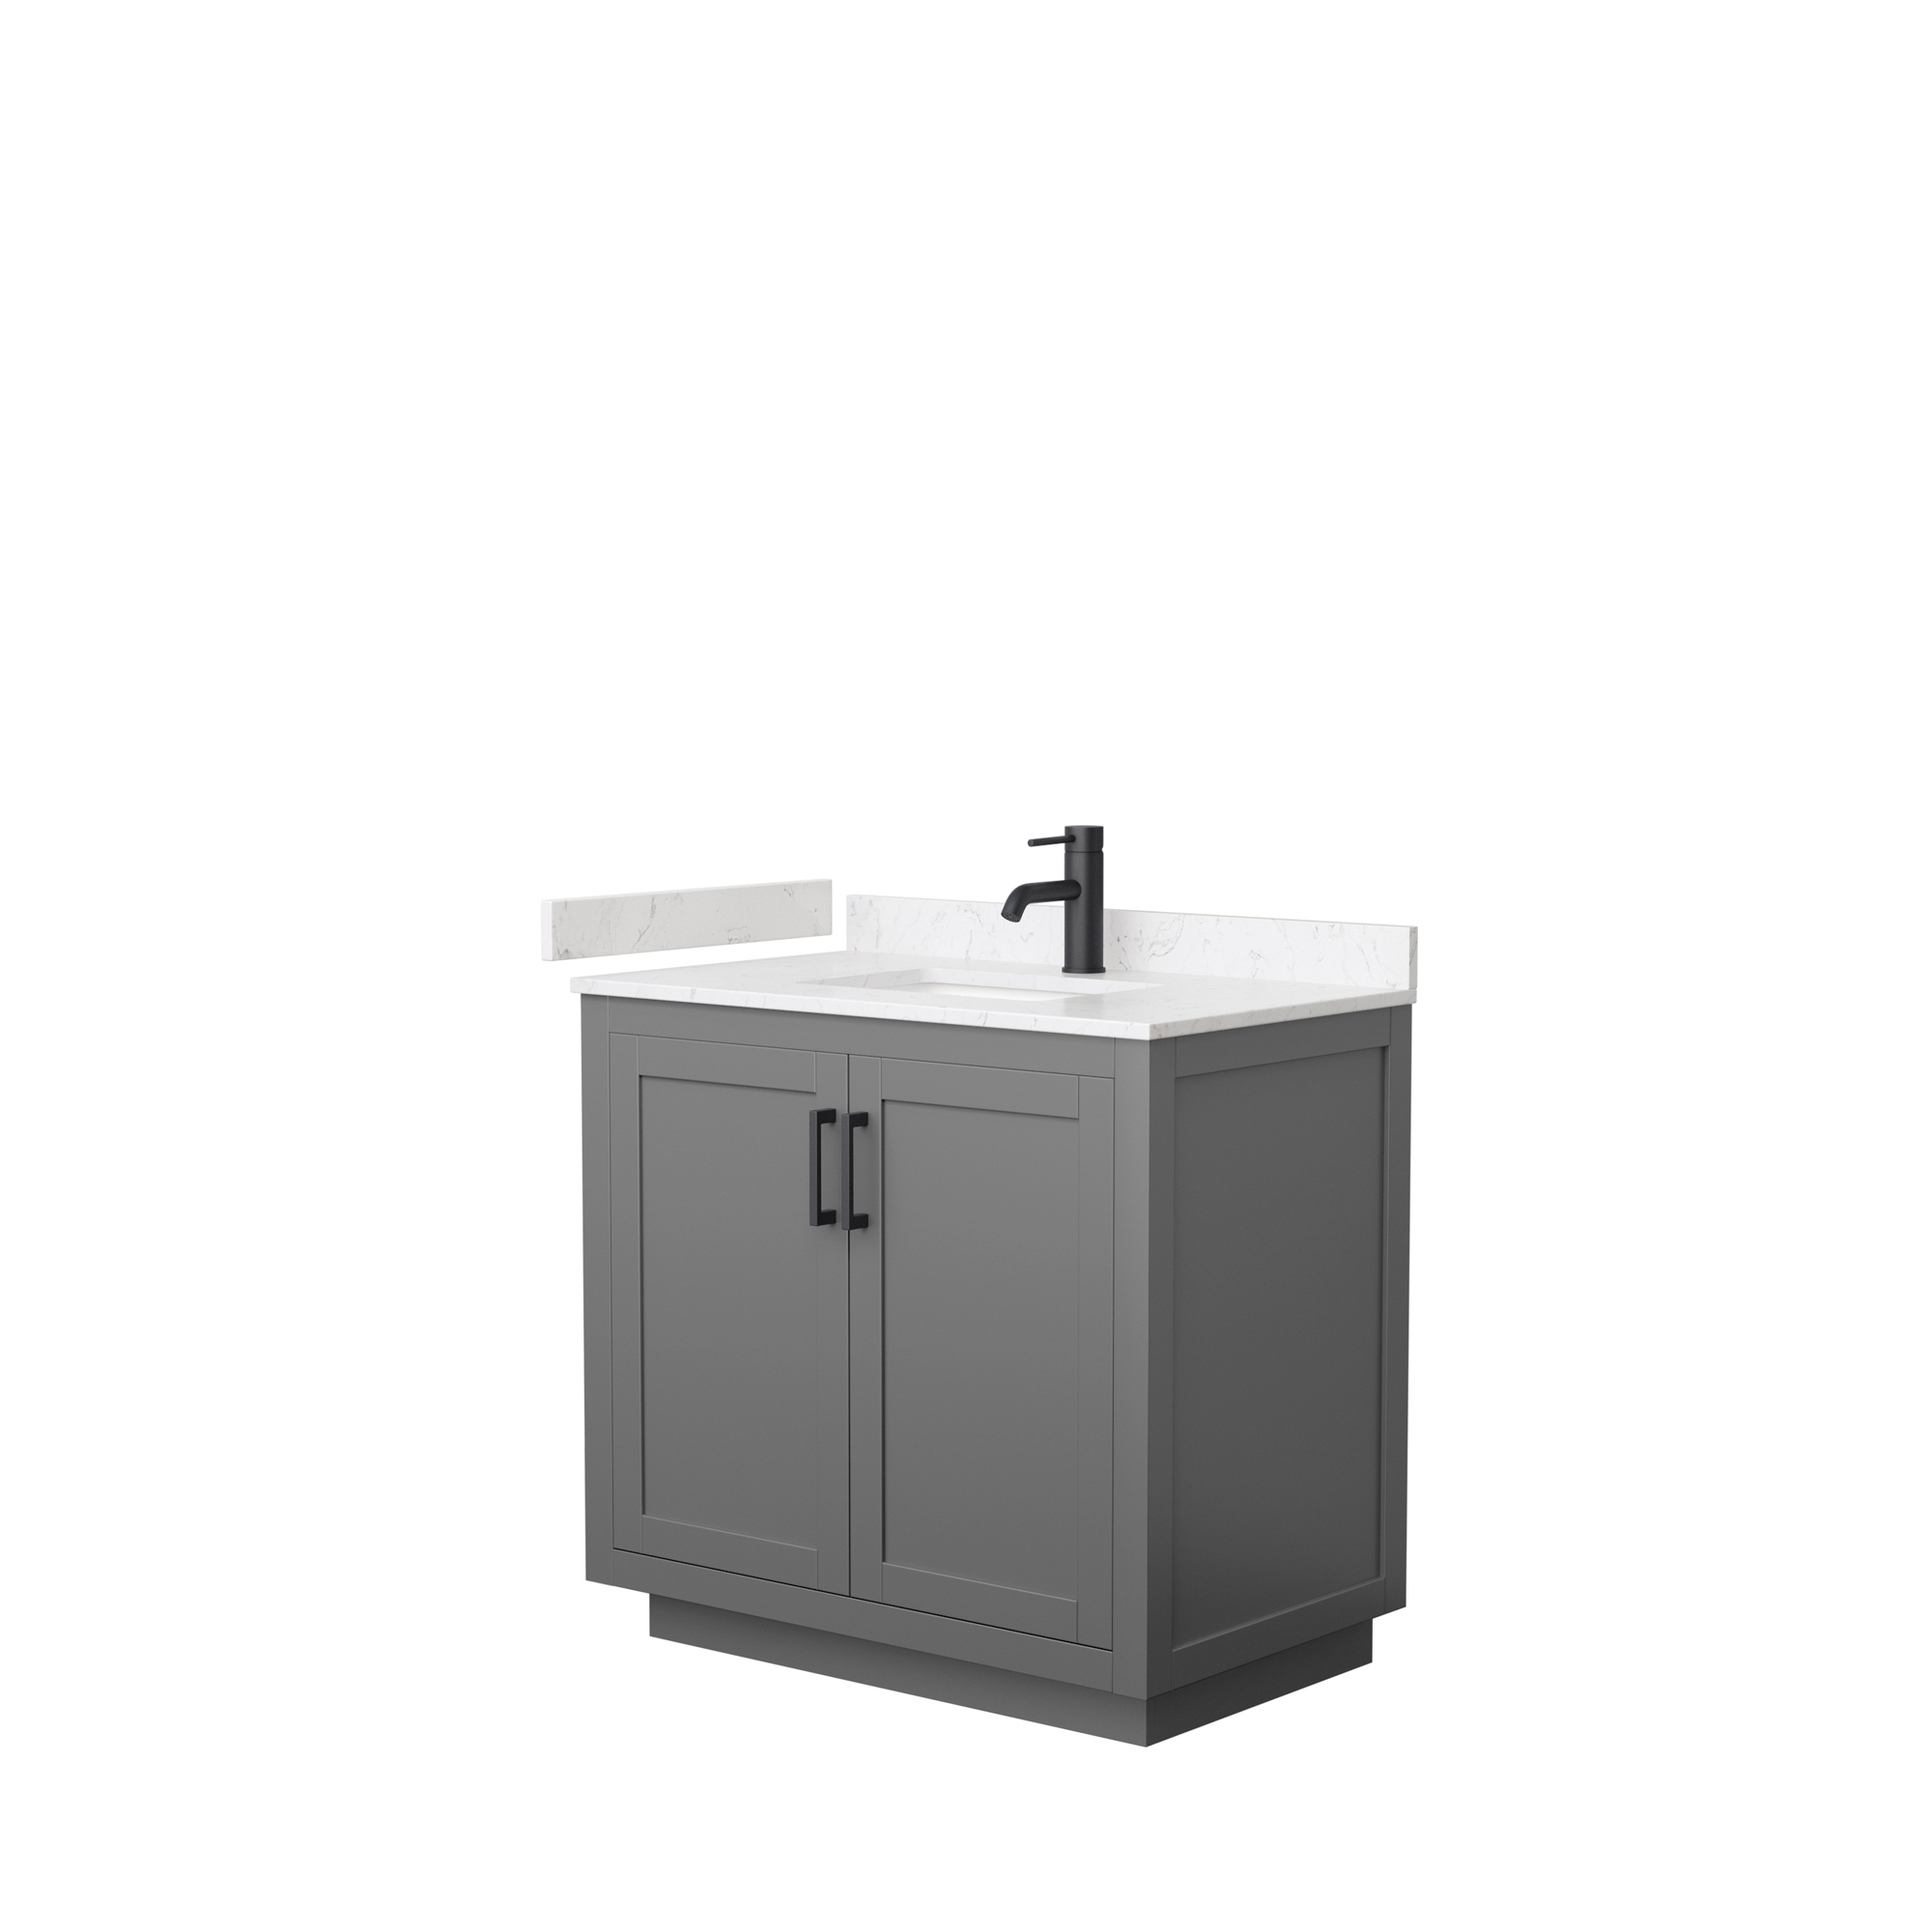 36" Single Bathroom Vanity in Dark Gray, Light-Vein Carrara Cultured Marble Countertop, Undermount Square Sink, Matte Black Trim